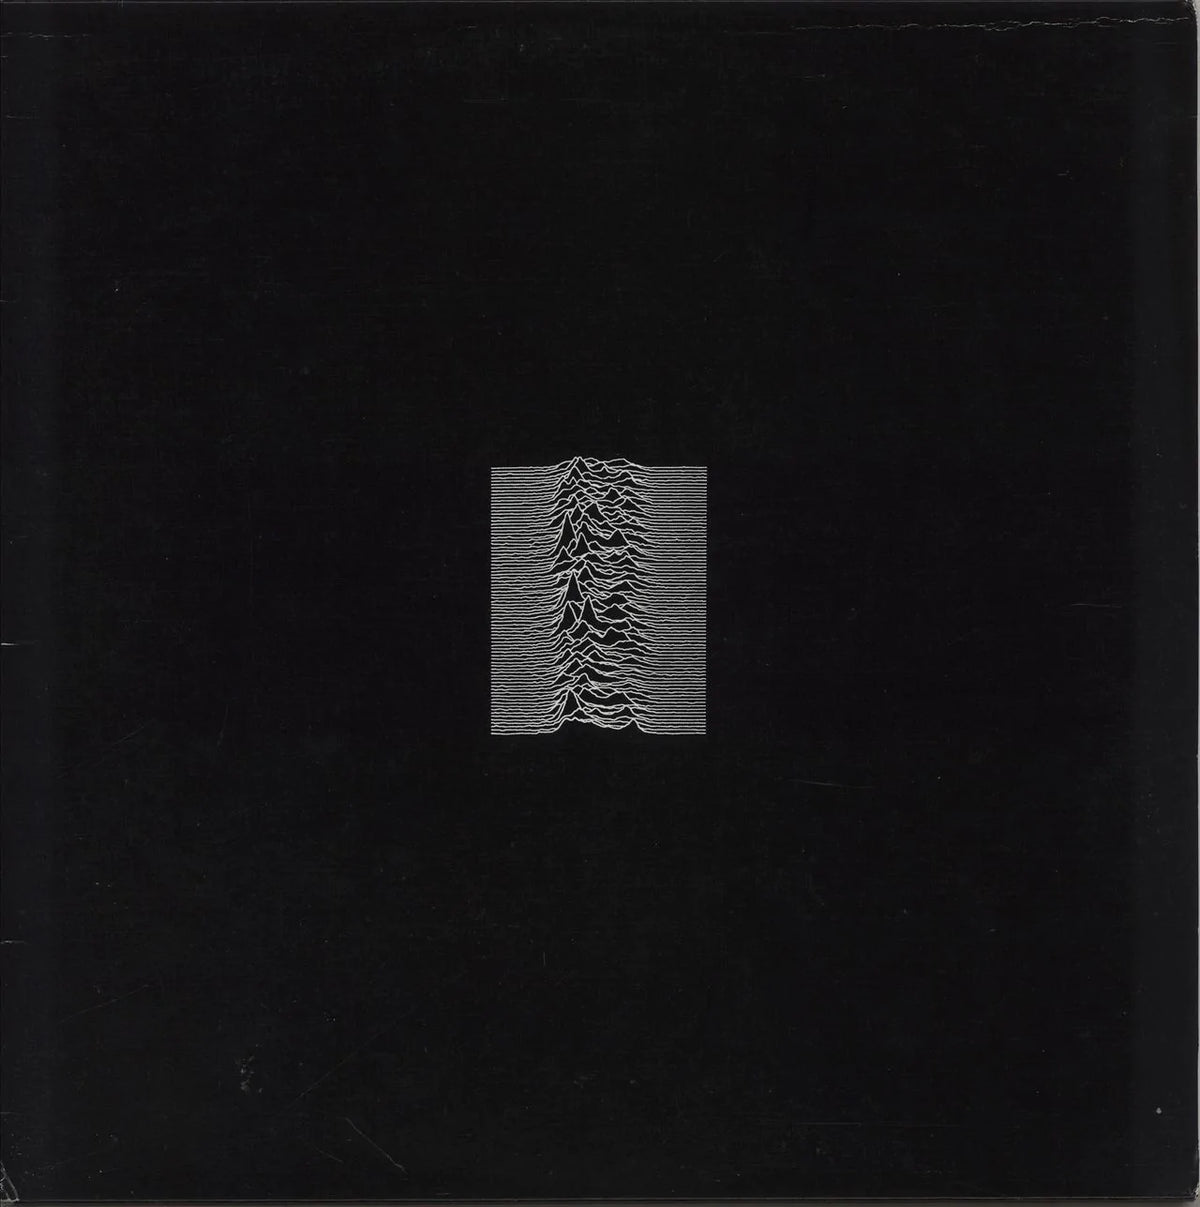 Joy Division - Unknown Pleasures LP (180g, Remastered, Textured Sleeve)